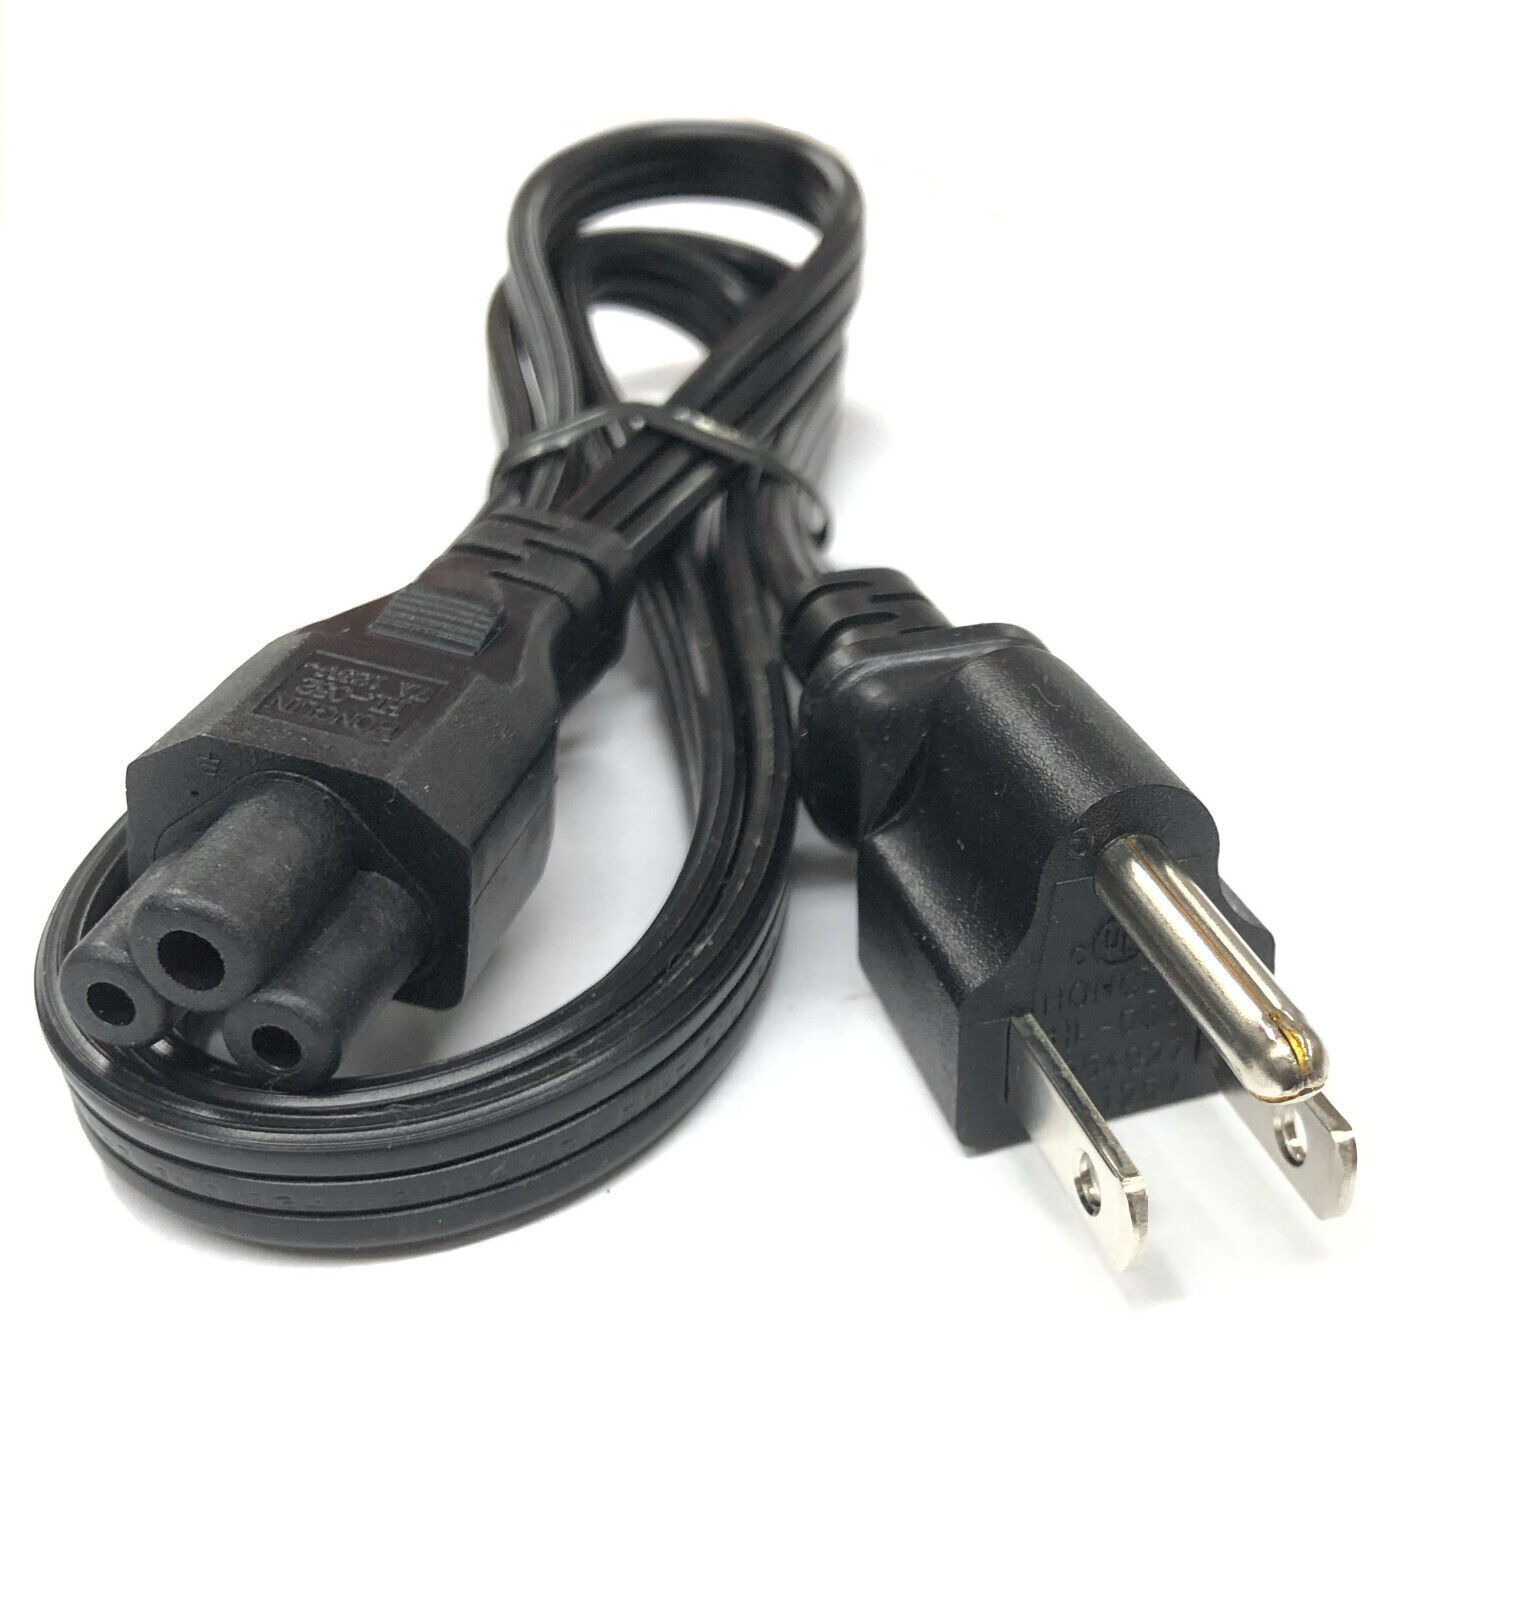 Original HONGLIN  3.3 Ft AC Power cord HL-052 HL-002 E254927 For Laptops